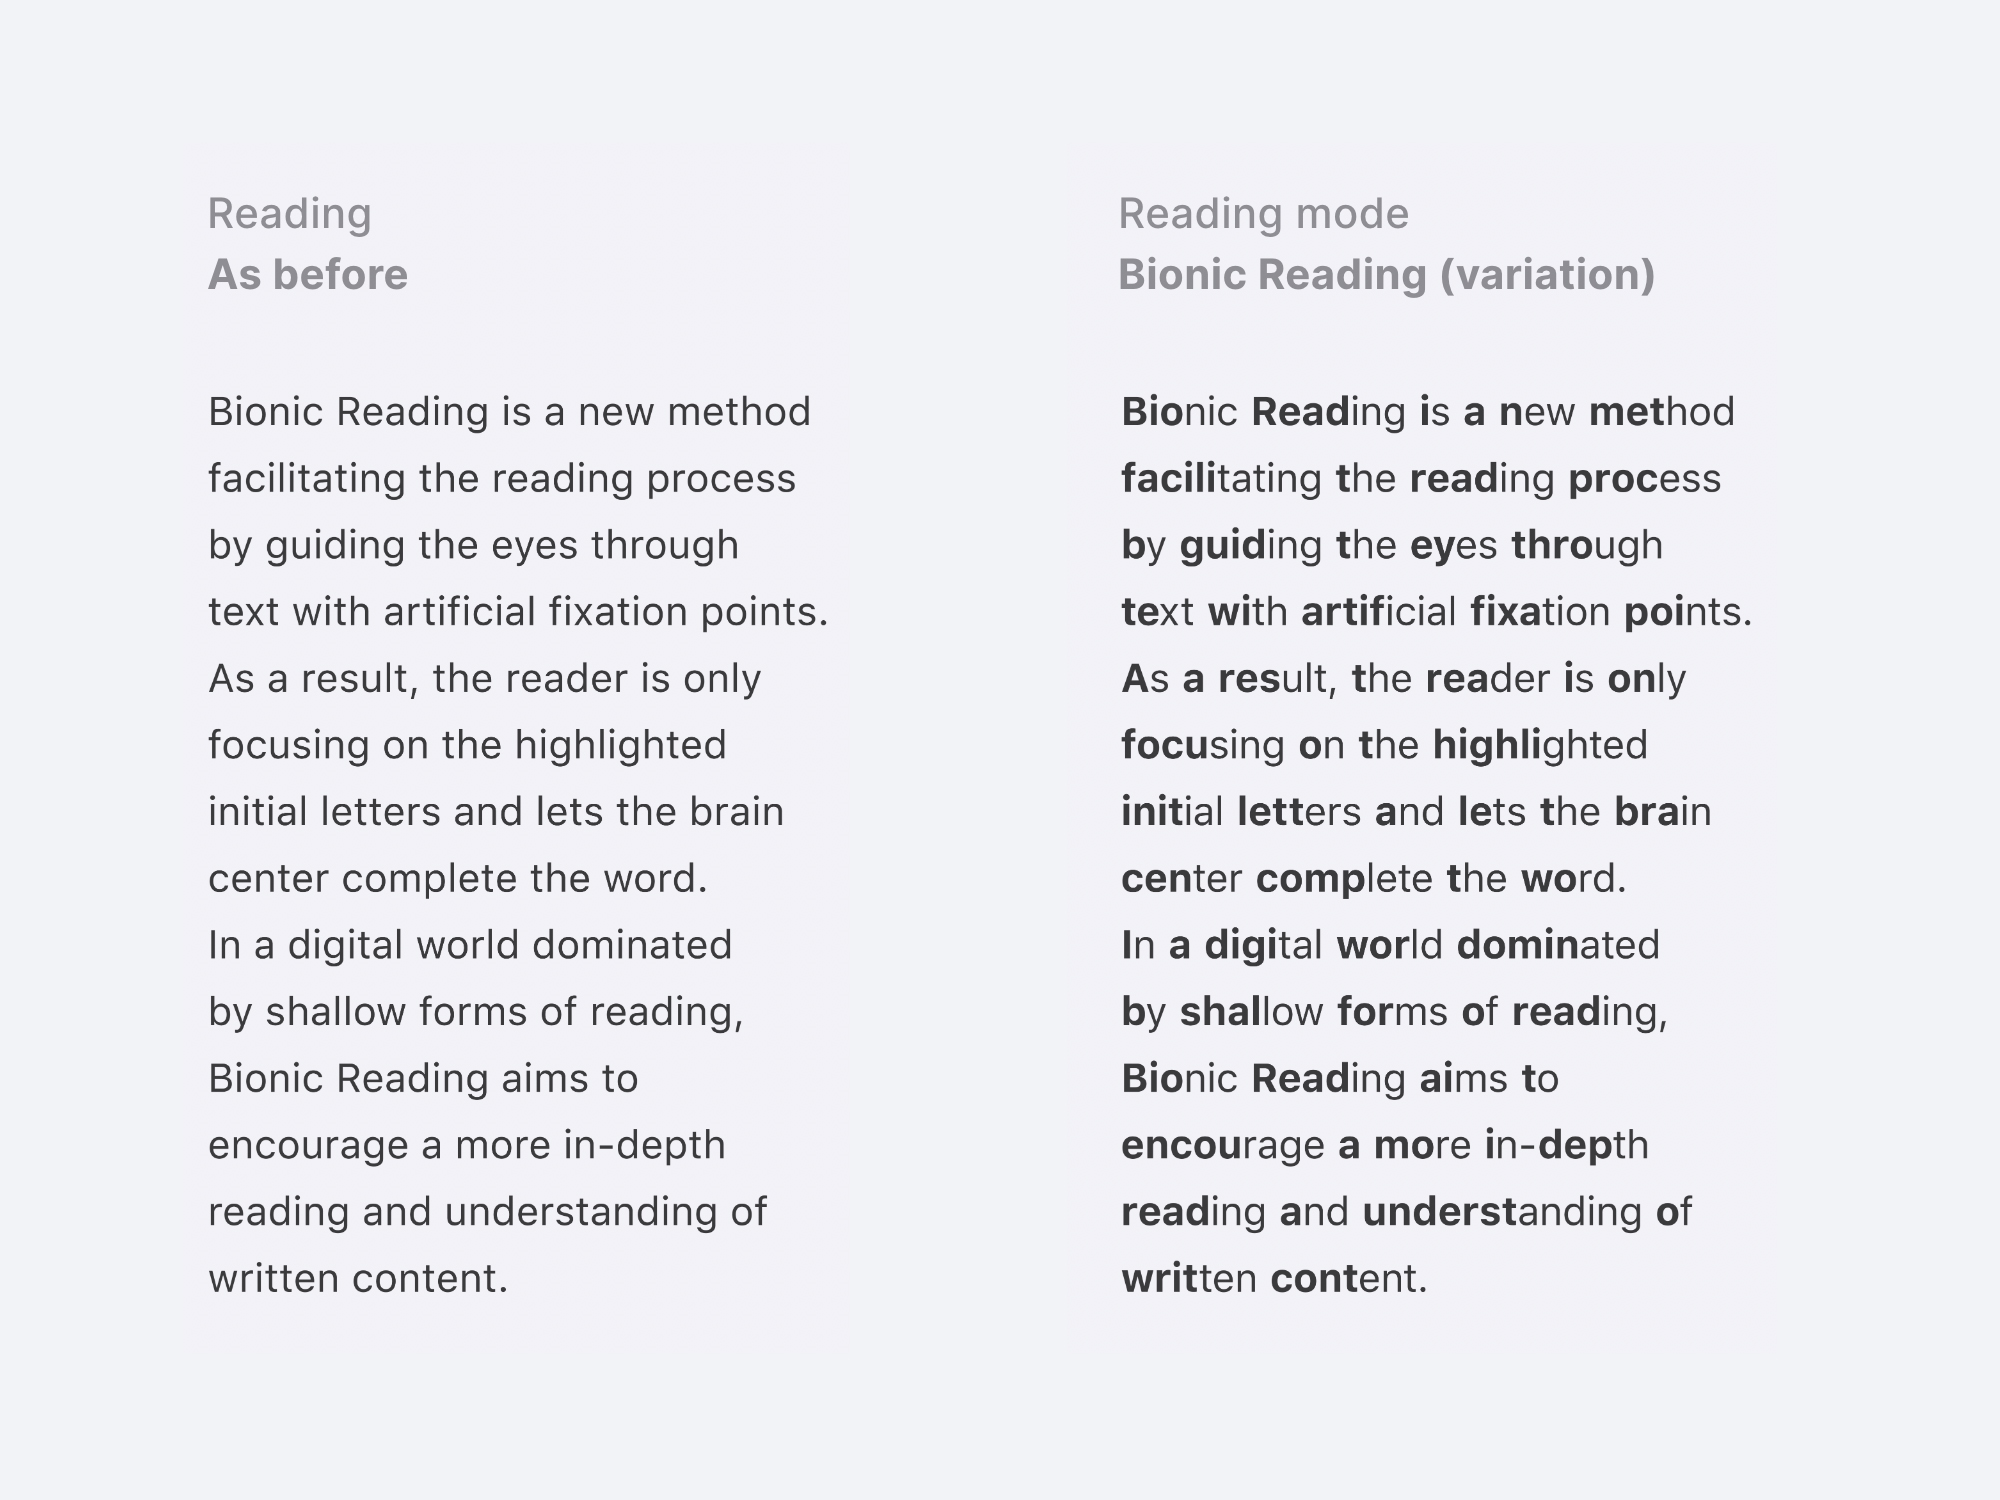 Normal Reading vs. Bionic Reading